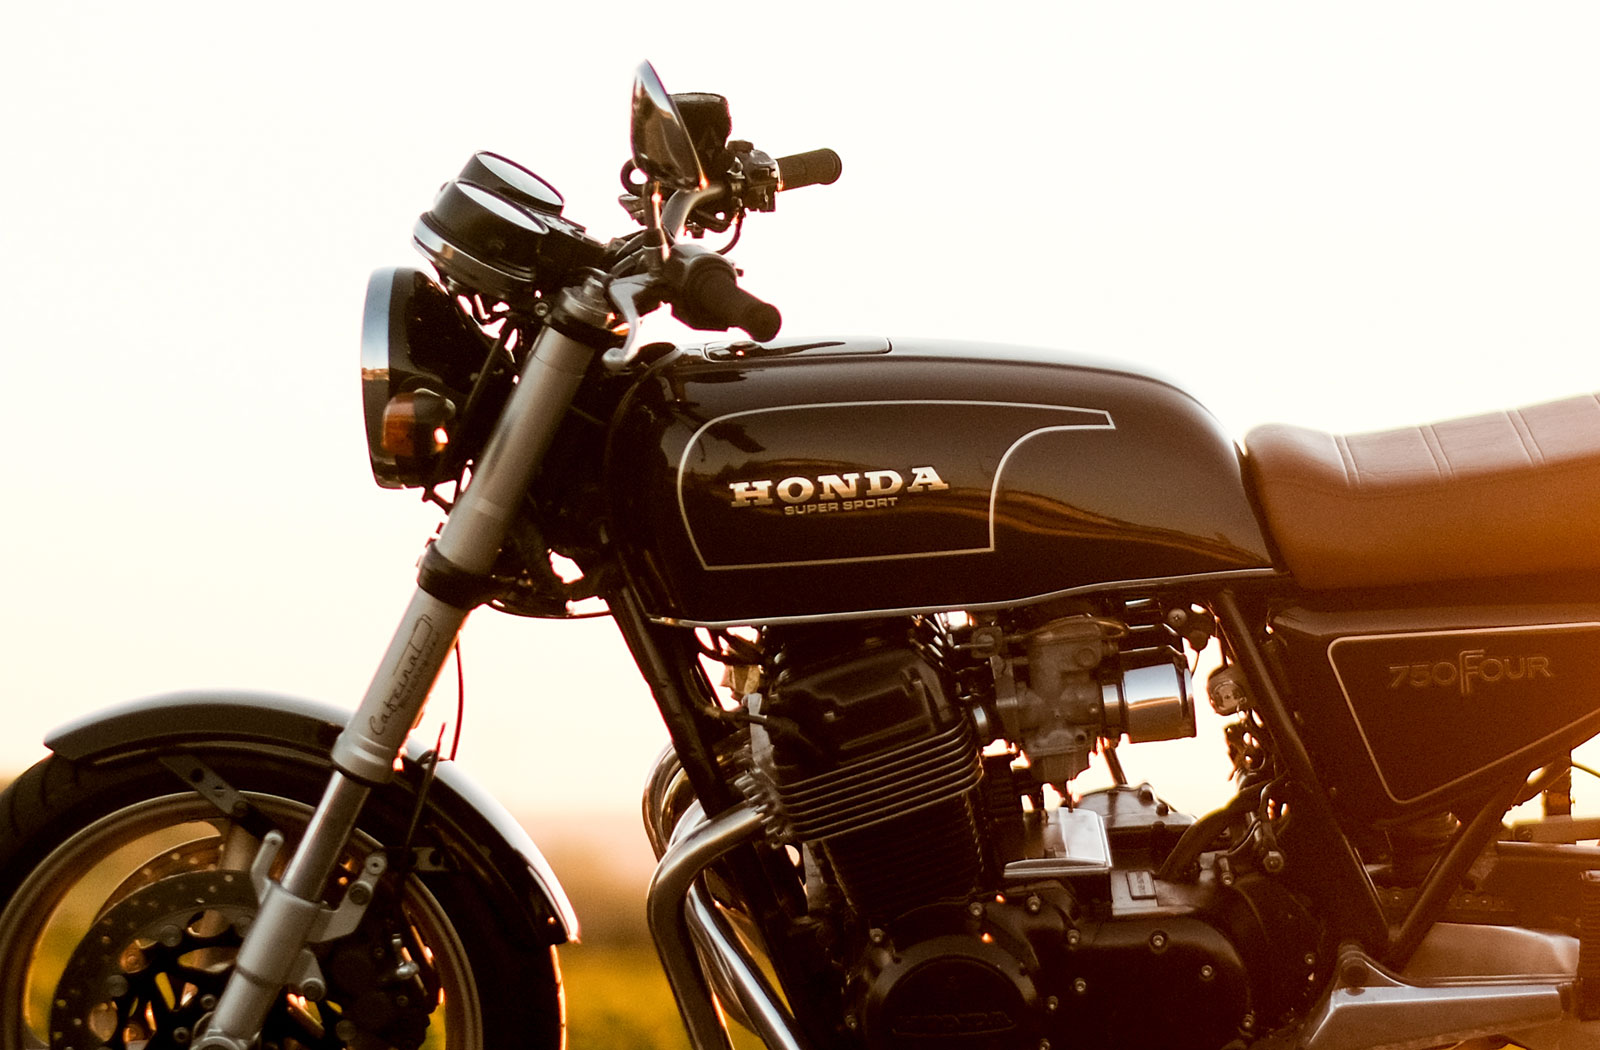 Honda CB750 resto-mod